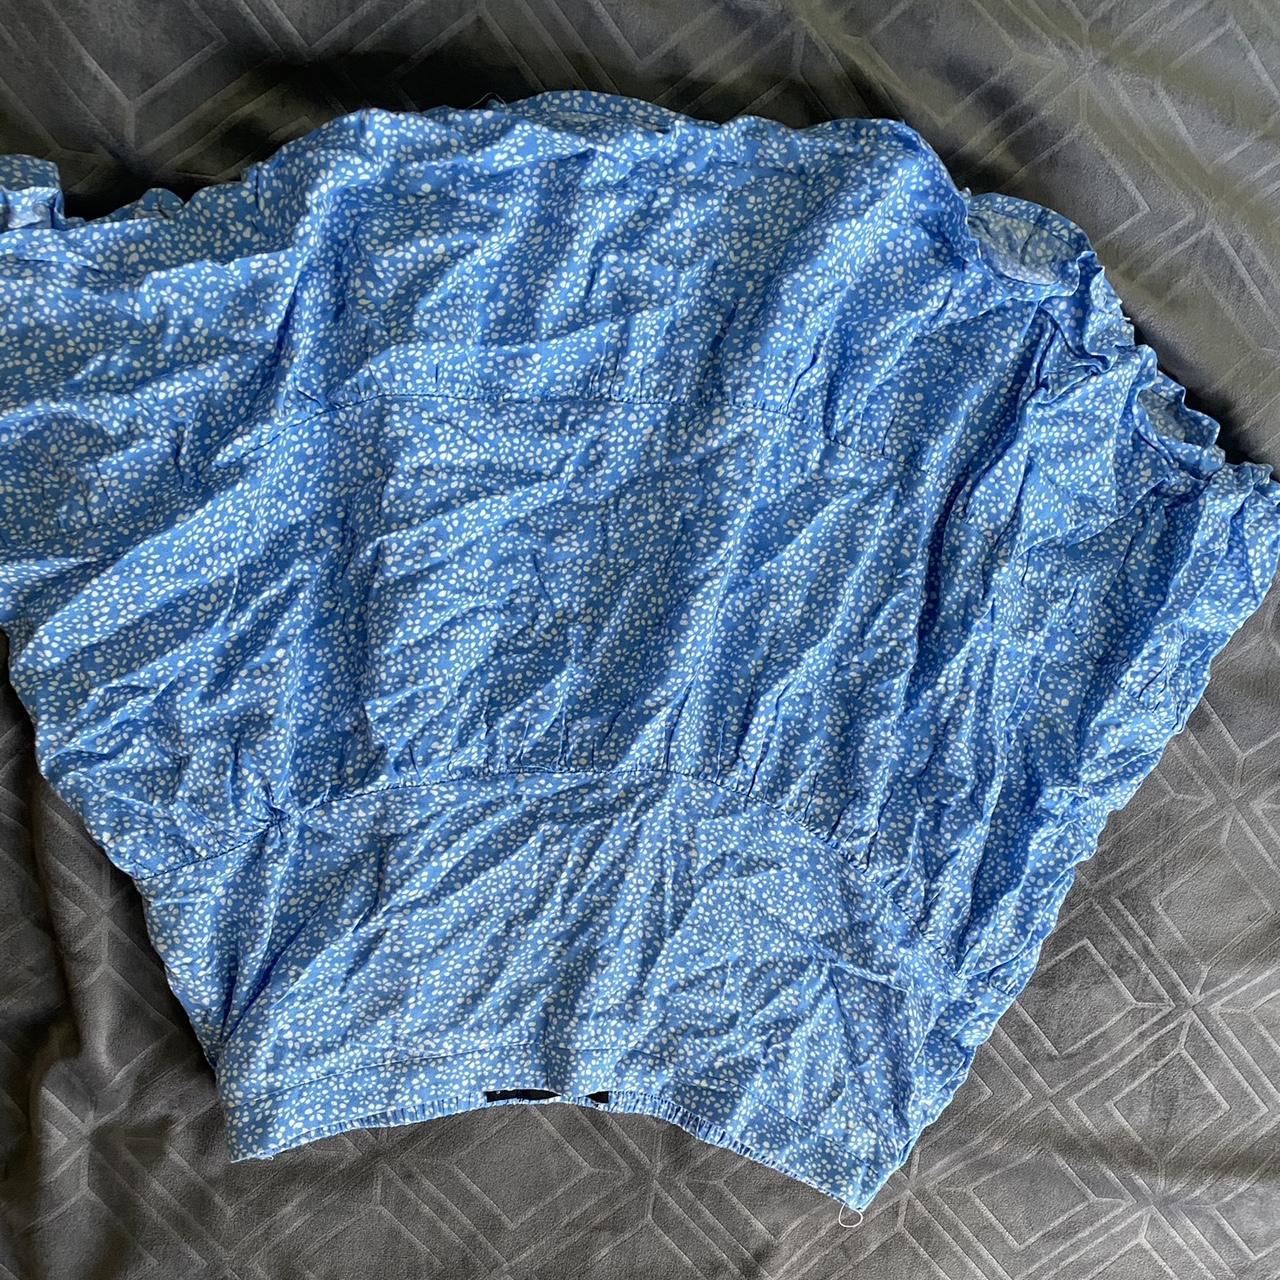 blue nunui skirt very flattering fit, only ever... - Depop